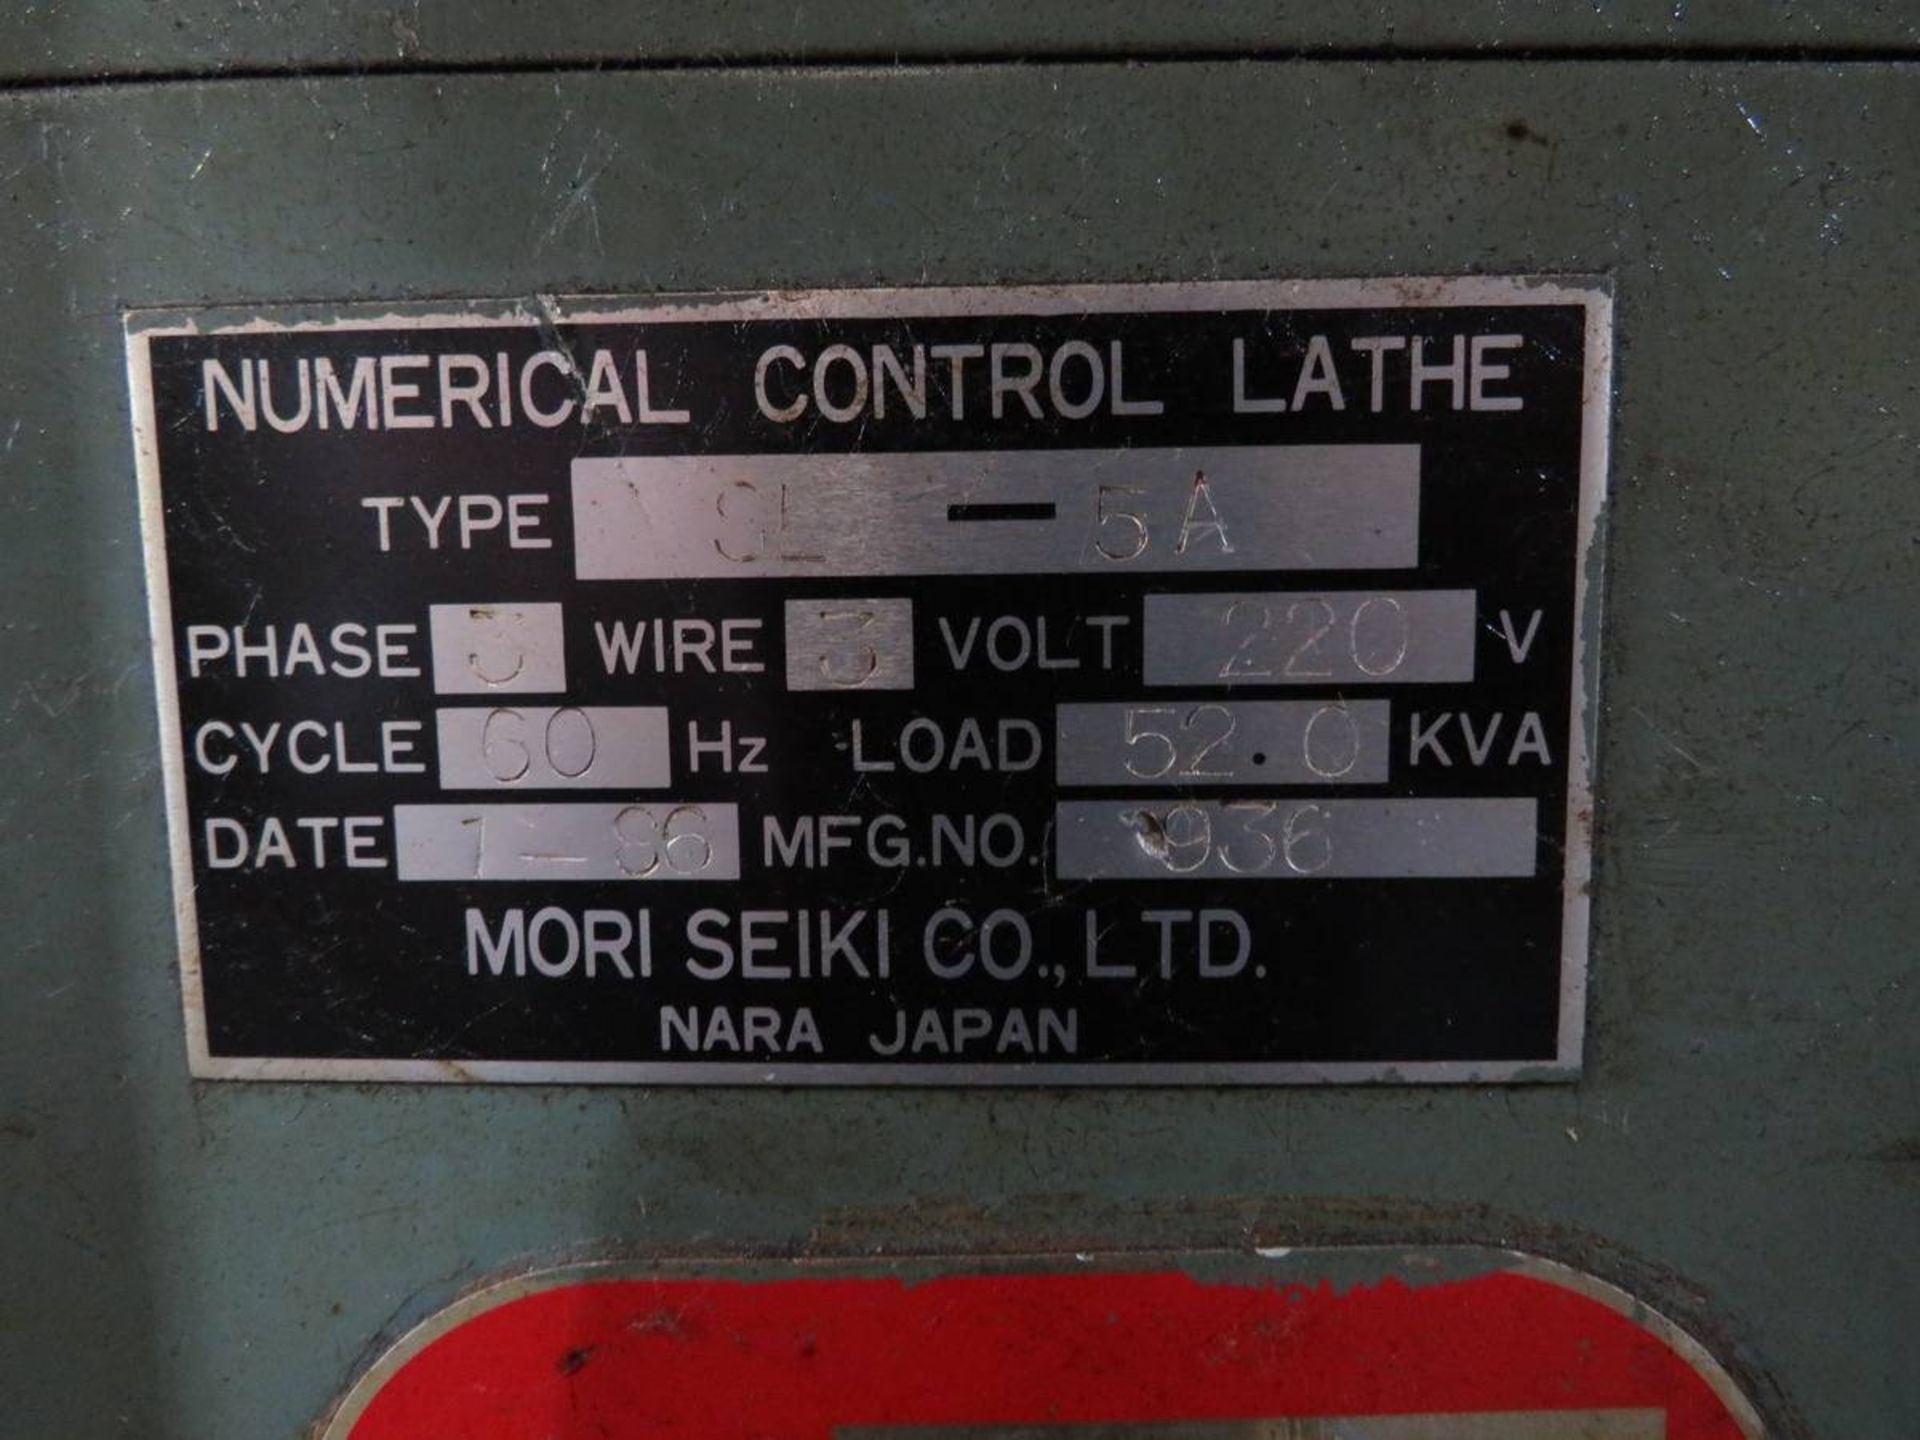 1986 Mori Seiki SL-5 2 Axis CNC Turning Center - Image 9 of 9